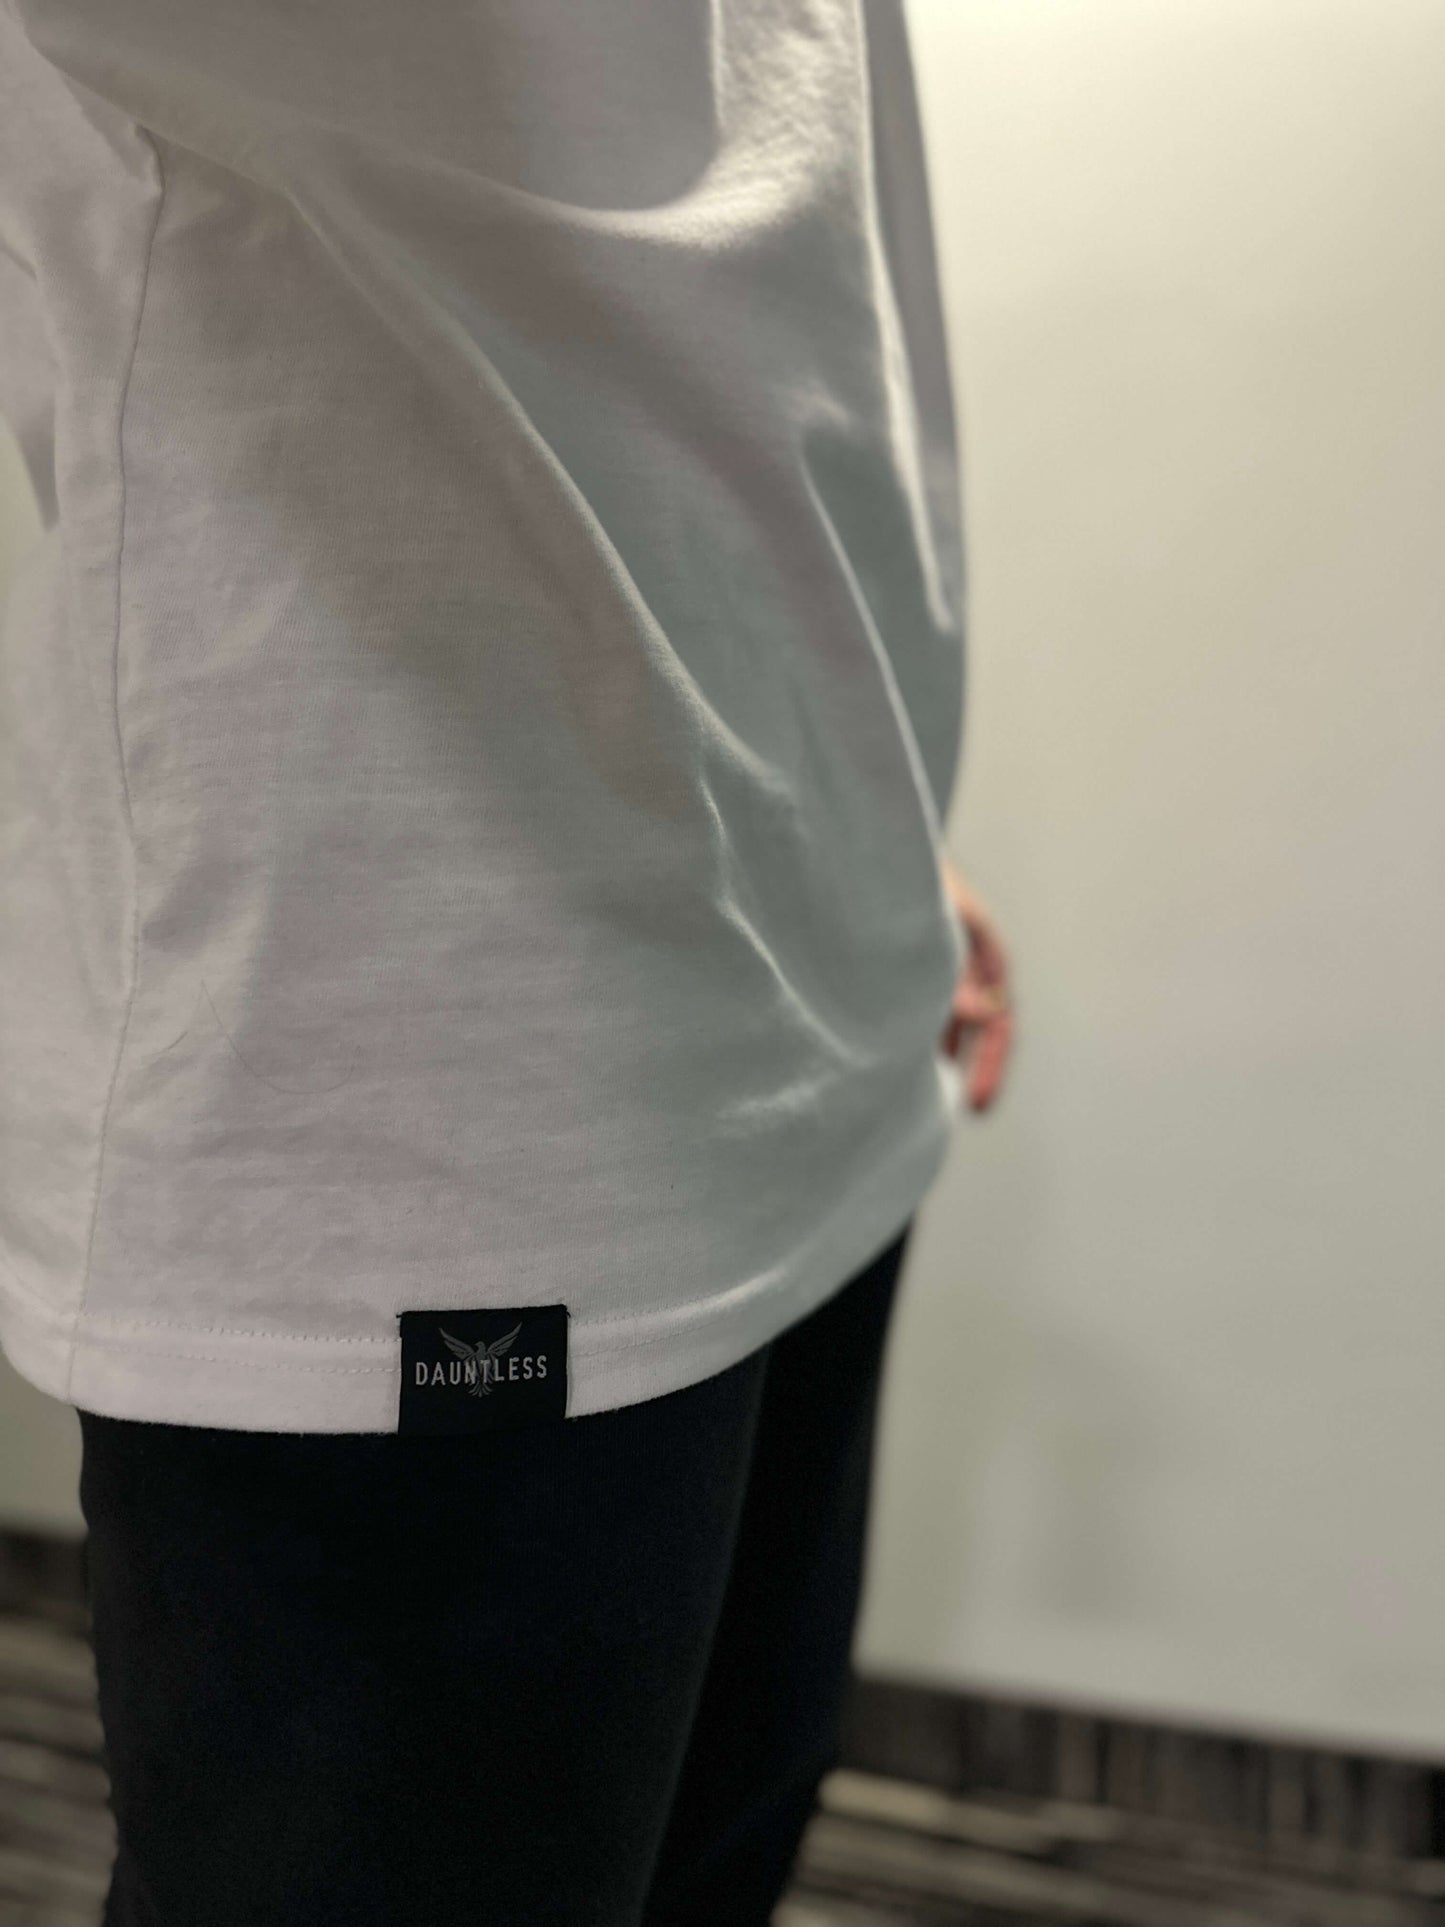 Viego Ruined Sword Shirt - DauntlessEagle